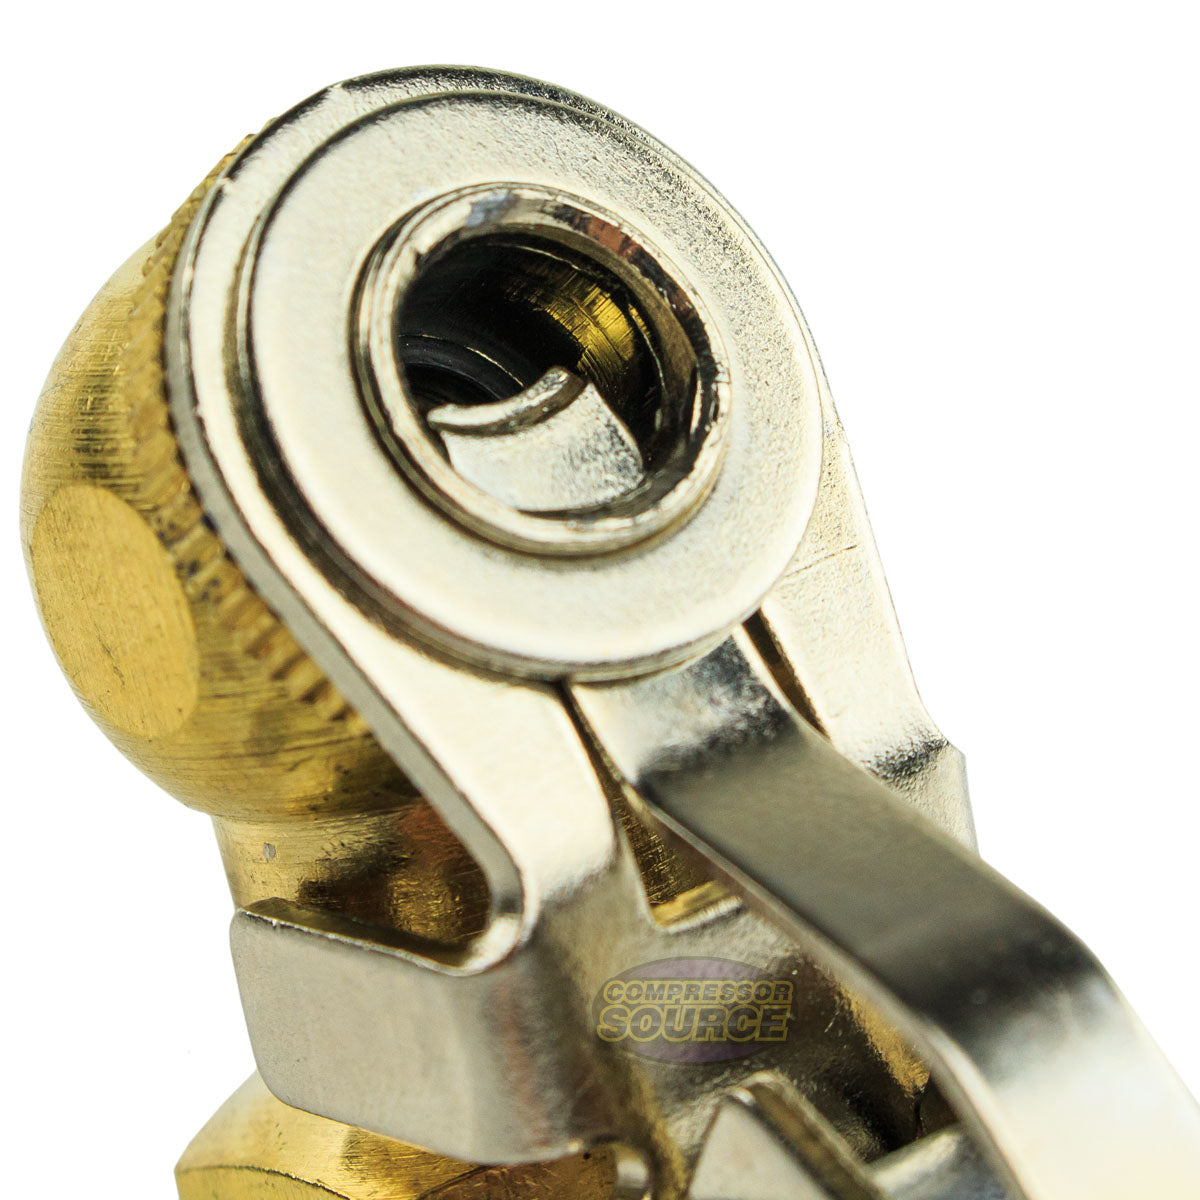 Locking Brass Air Tire Chuck Inflator Compressor Tool 1/4" NPT Hose Fitting